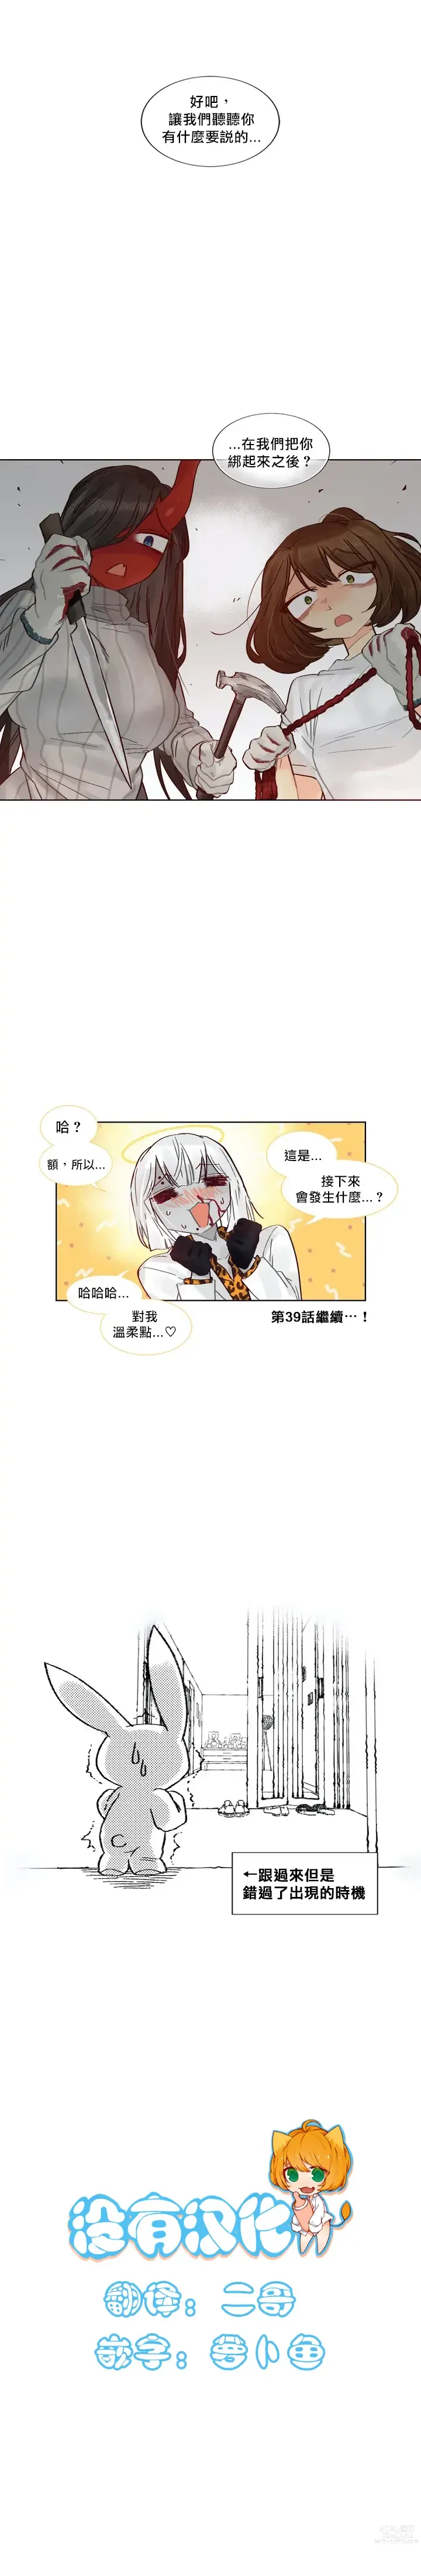 Page 315 of manga 天降惡魔